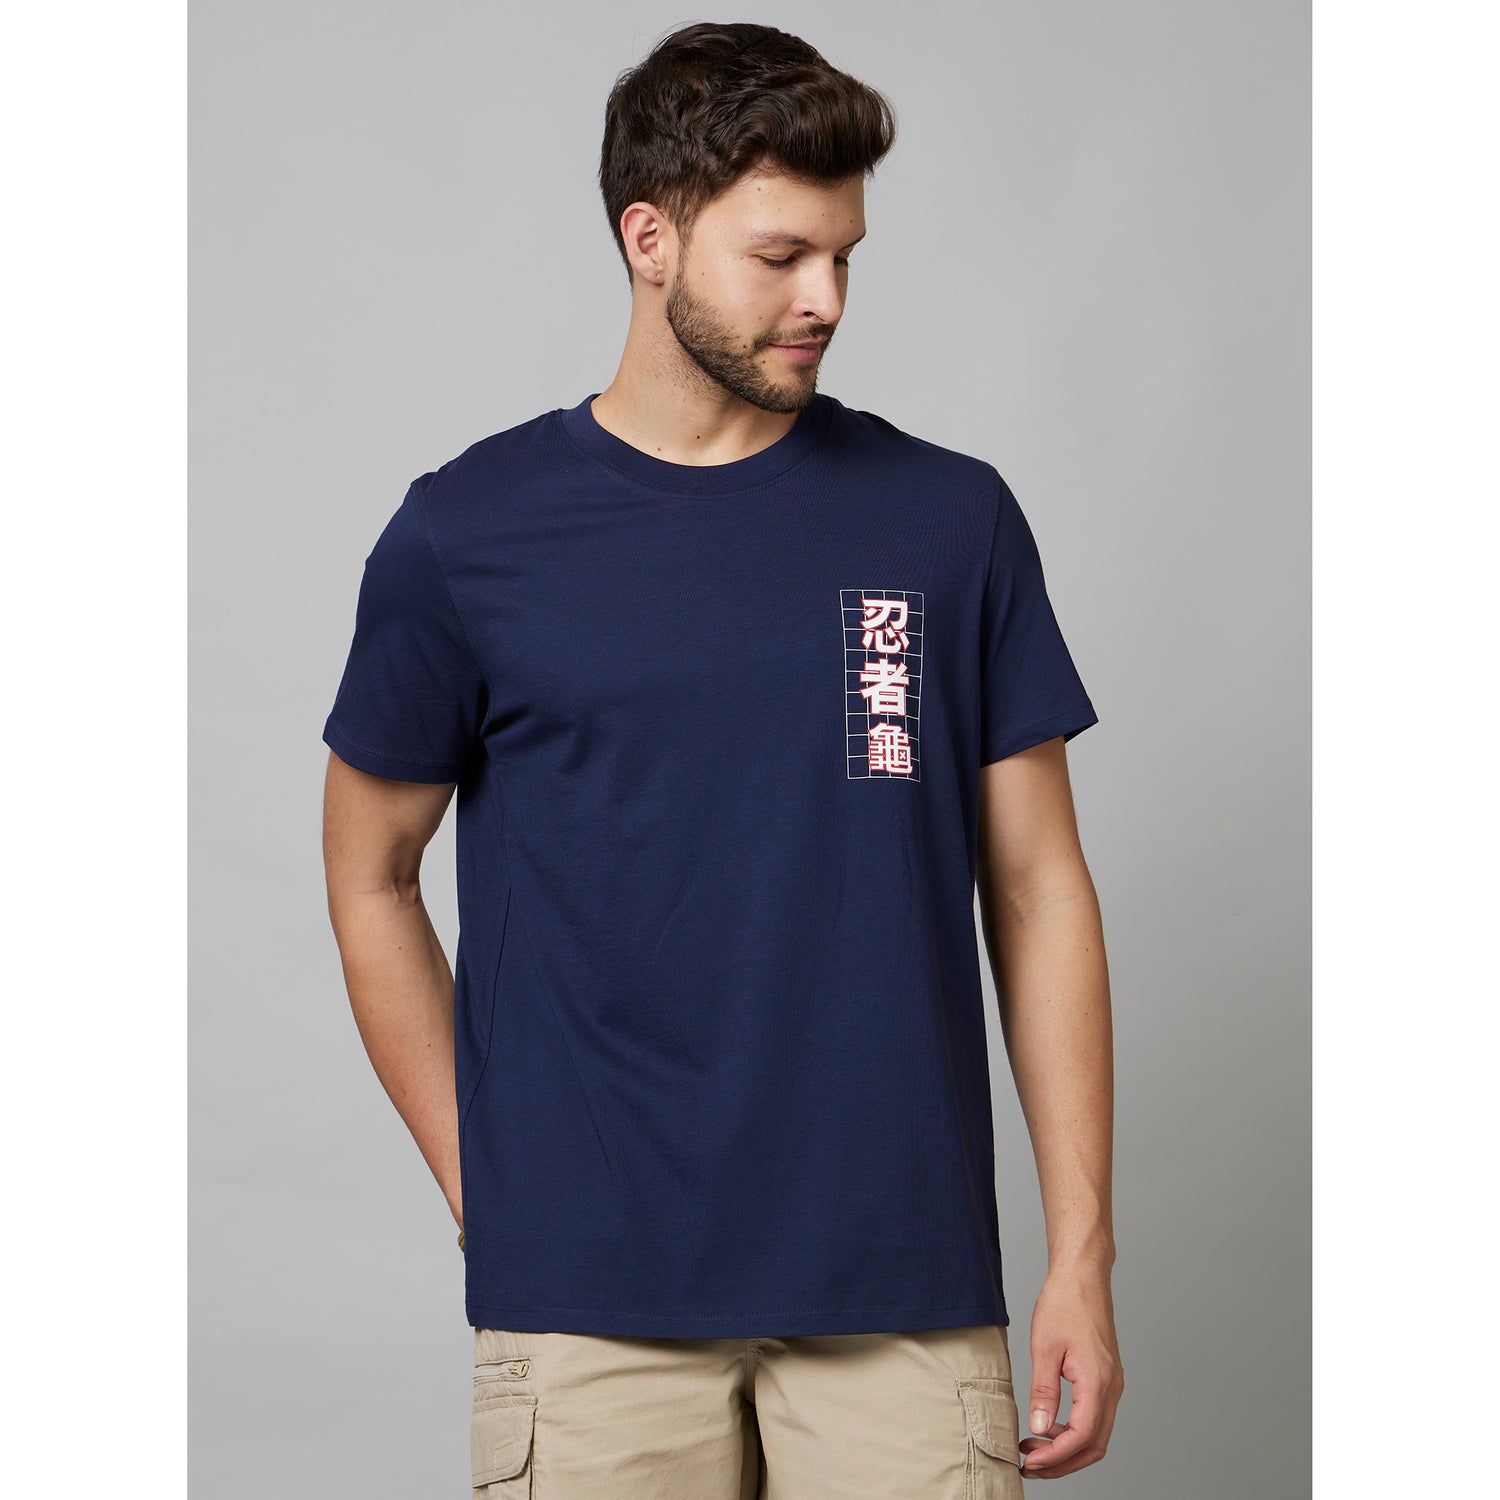 Teenage Mutant Ninja Turtle - Graphic Printed Navy Short Sleeve Cotton T-Shirts (LDETURTLE)